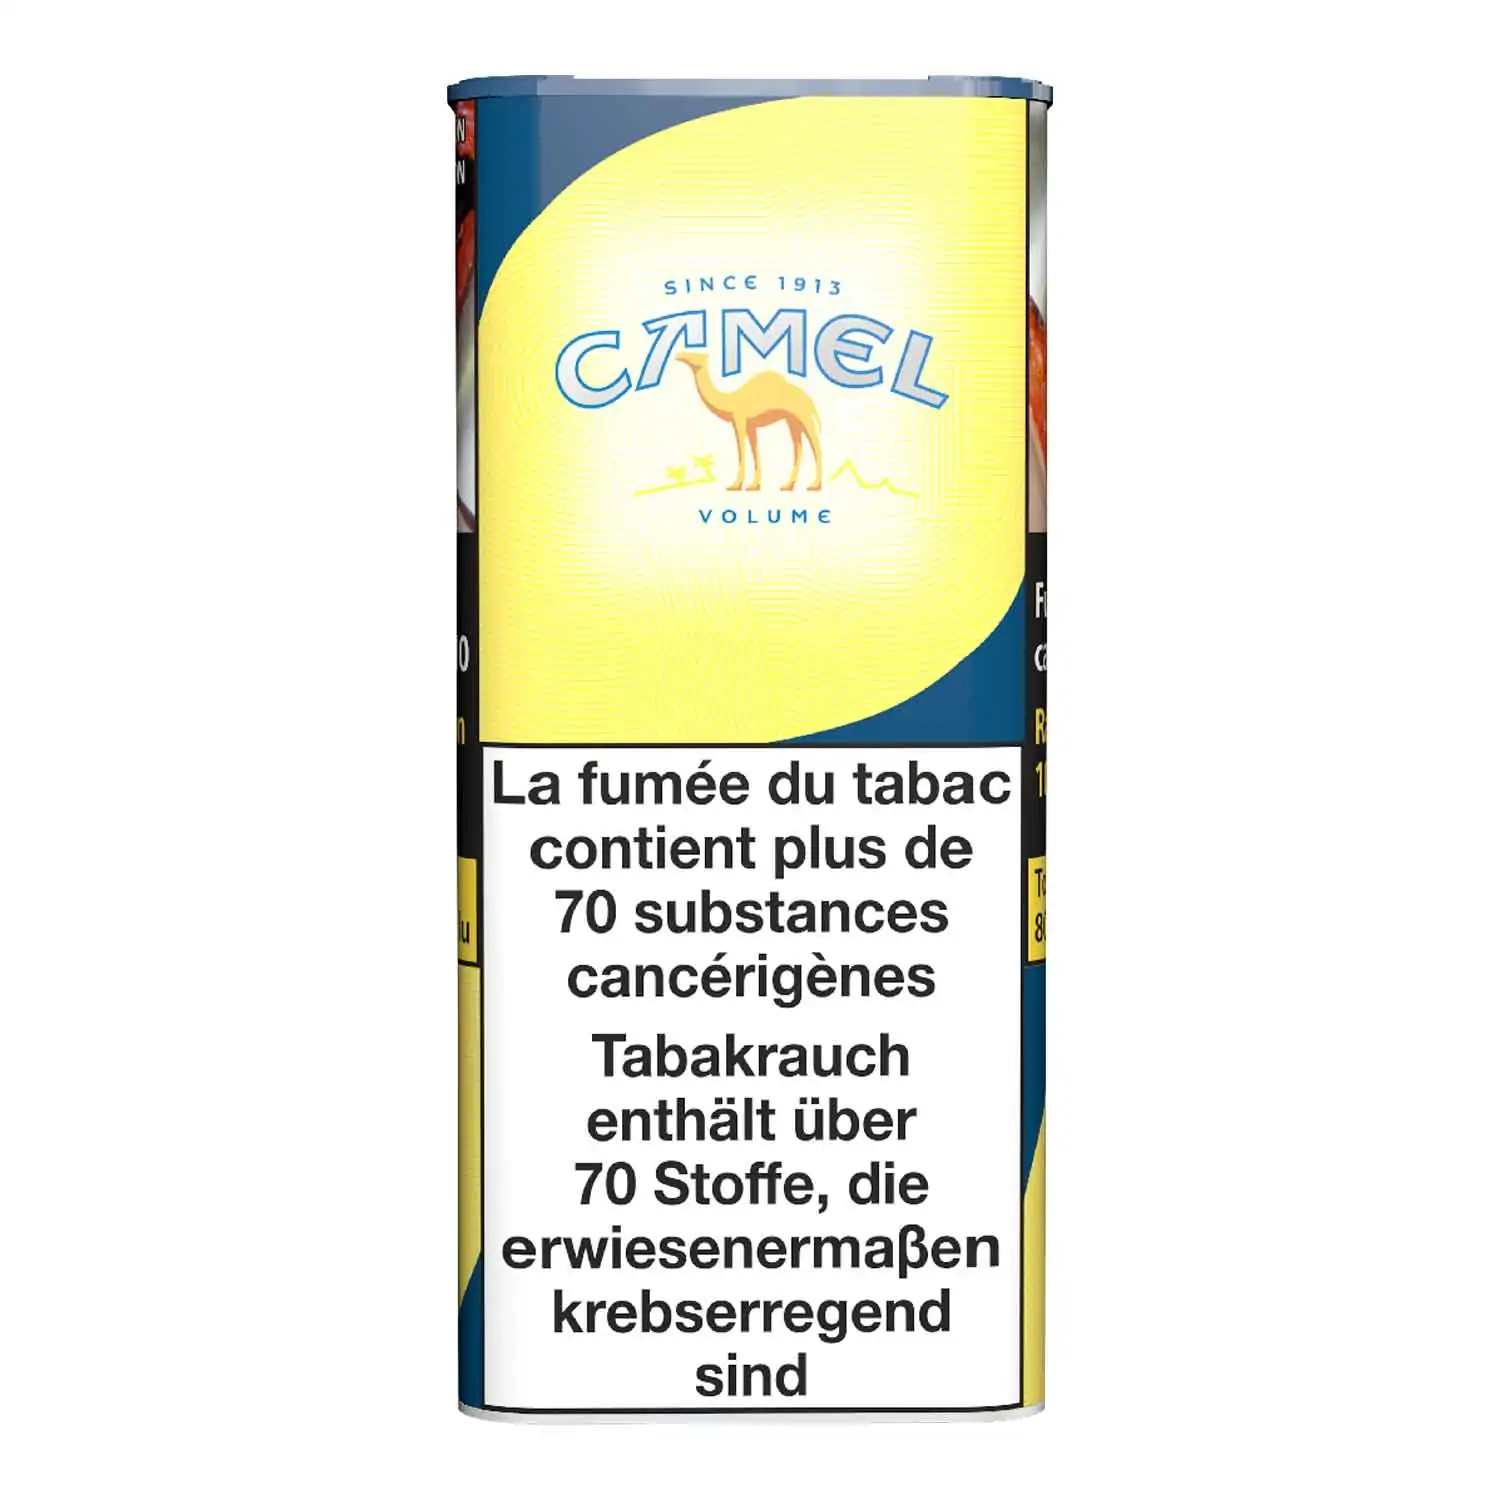 Camel volume yellow 125g - Buy at Real Tobacco